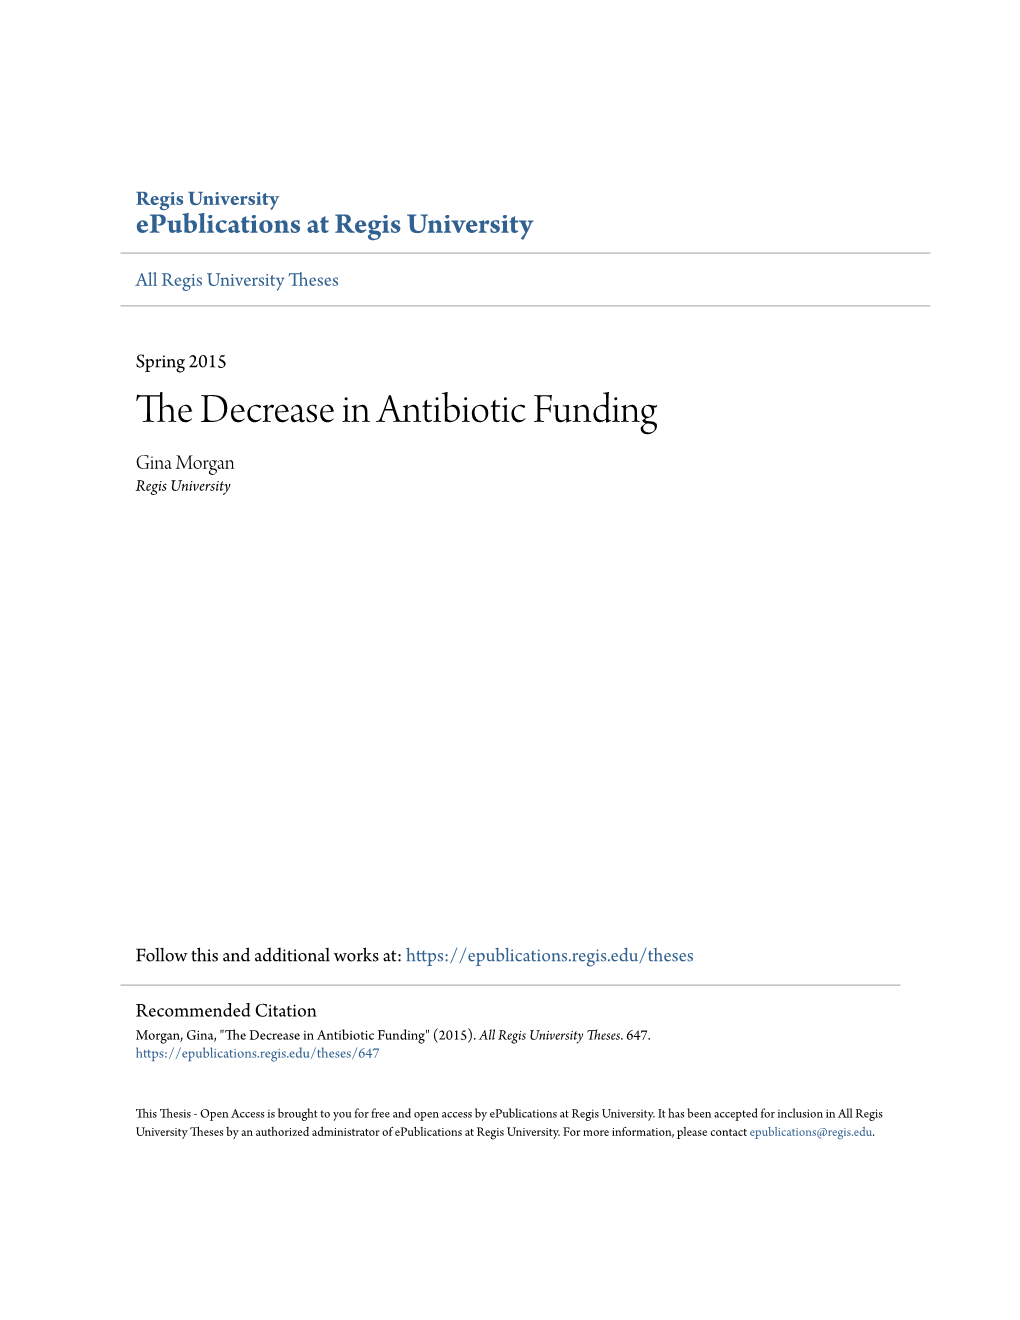 The Decrease in Antibiotic Funding